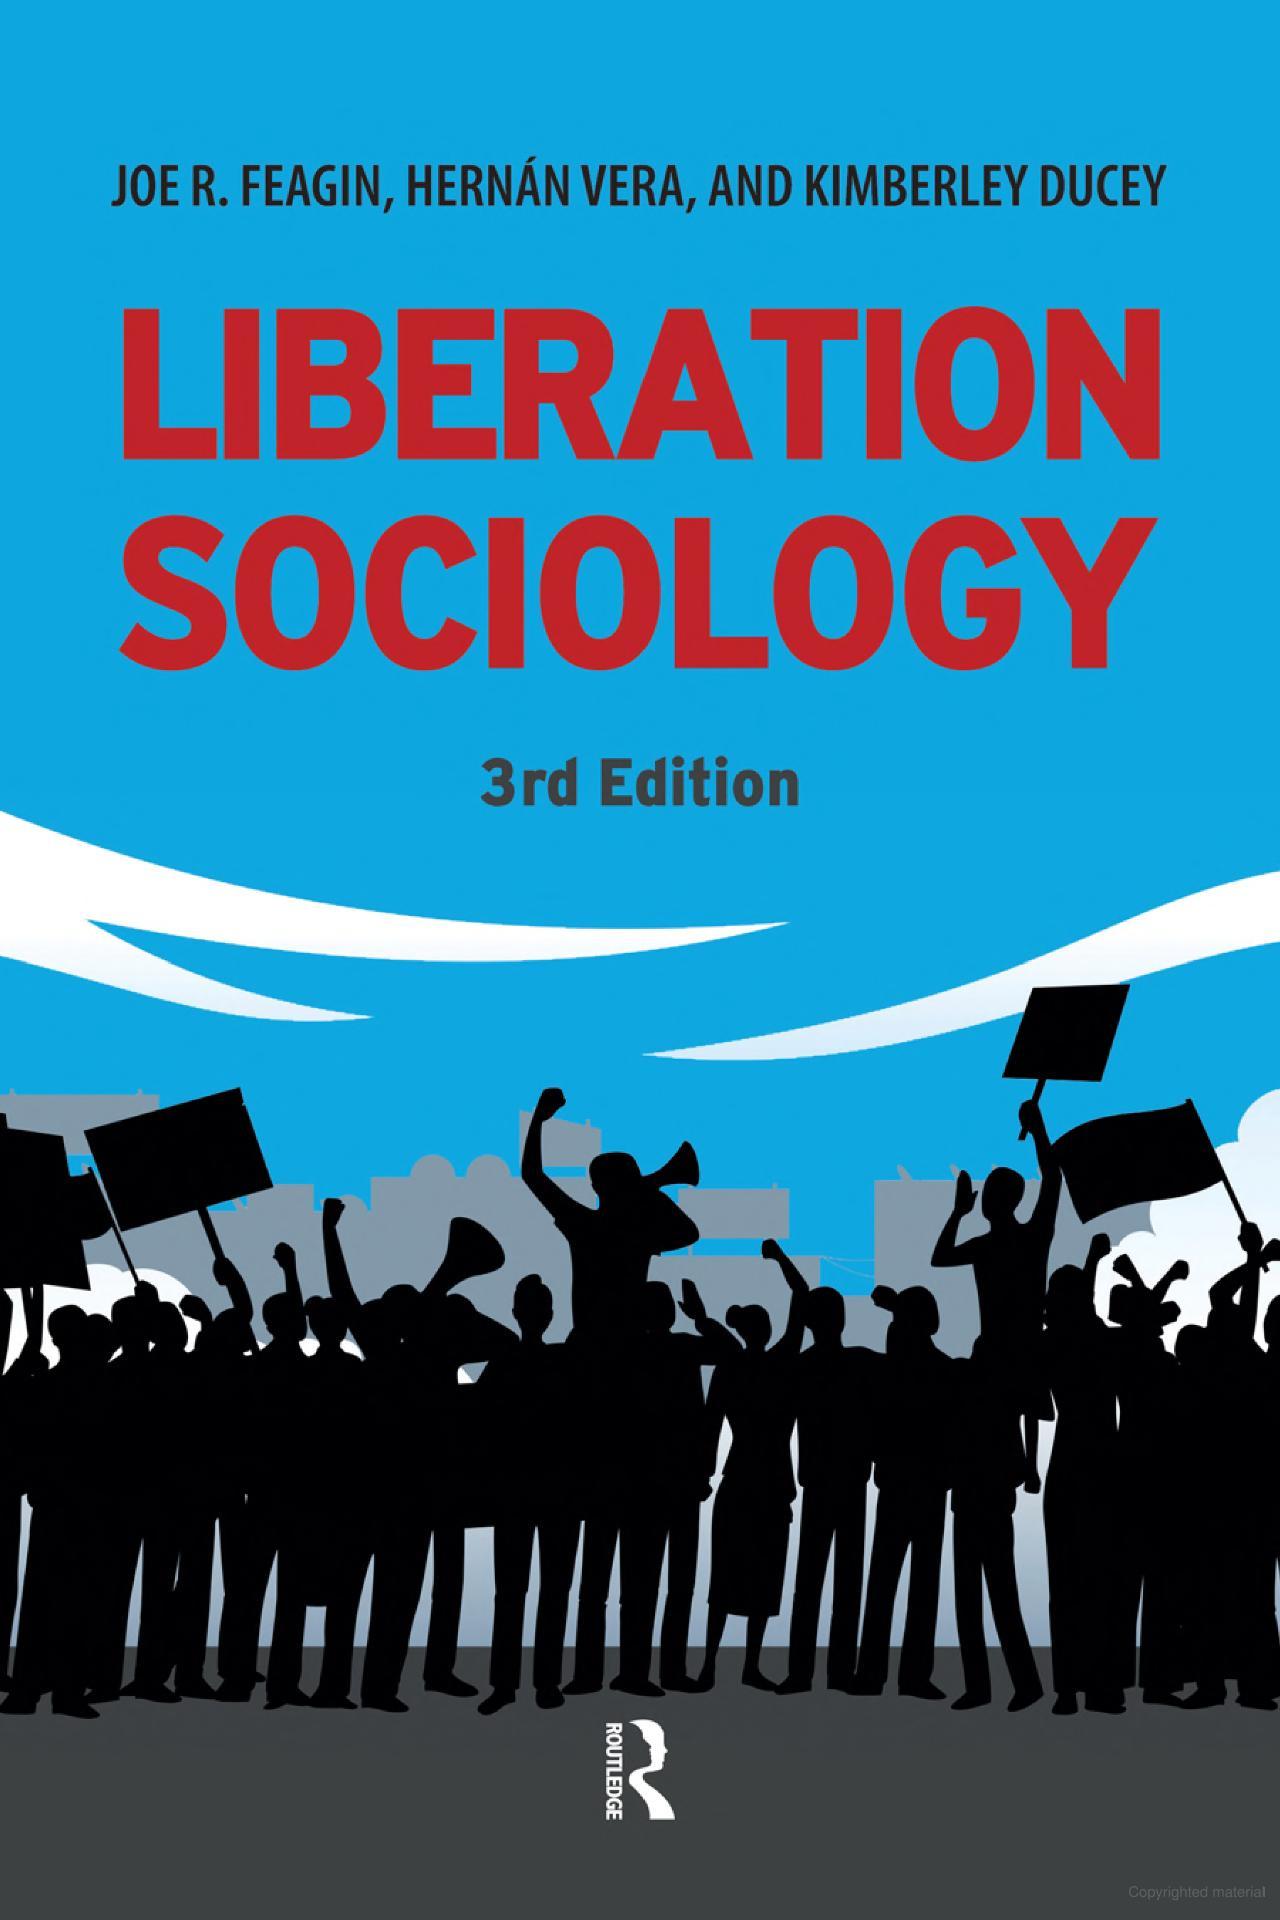 liberation sociology 3rd edition joe r. feagin, hernan vera, kimberly ducey 9781612057231